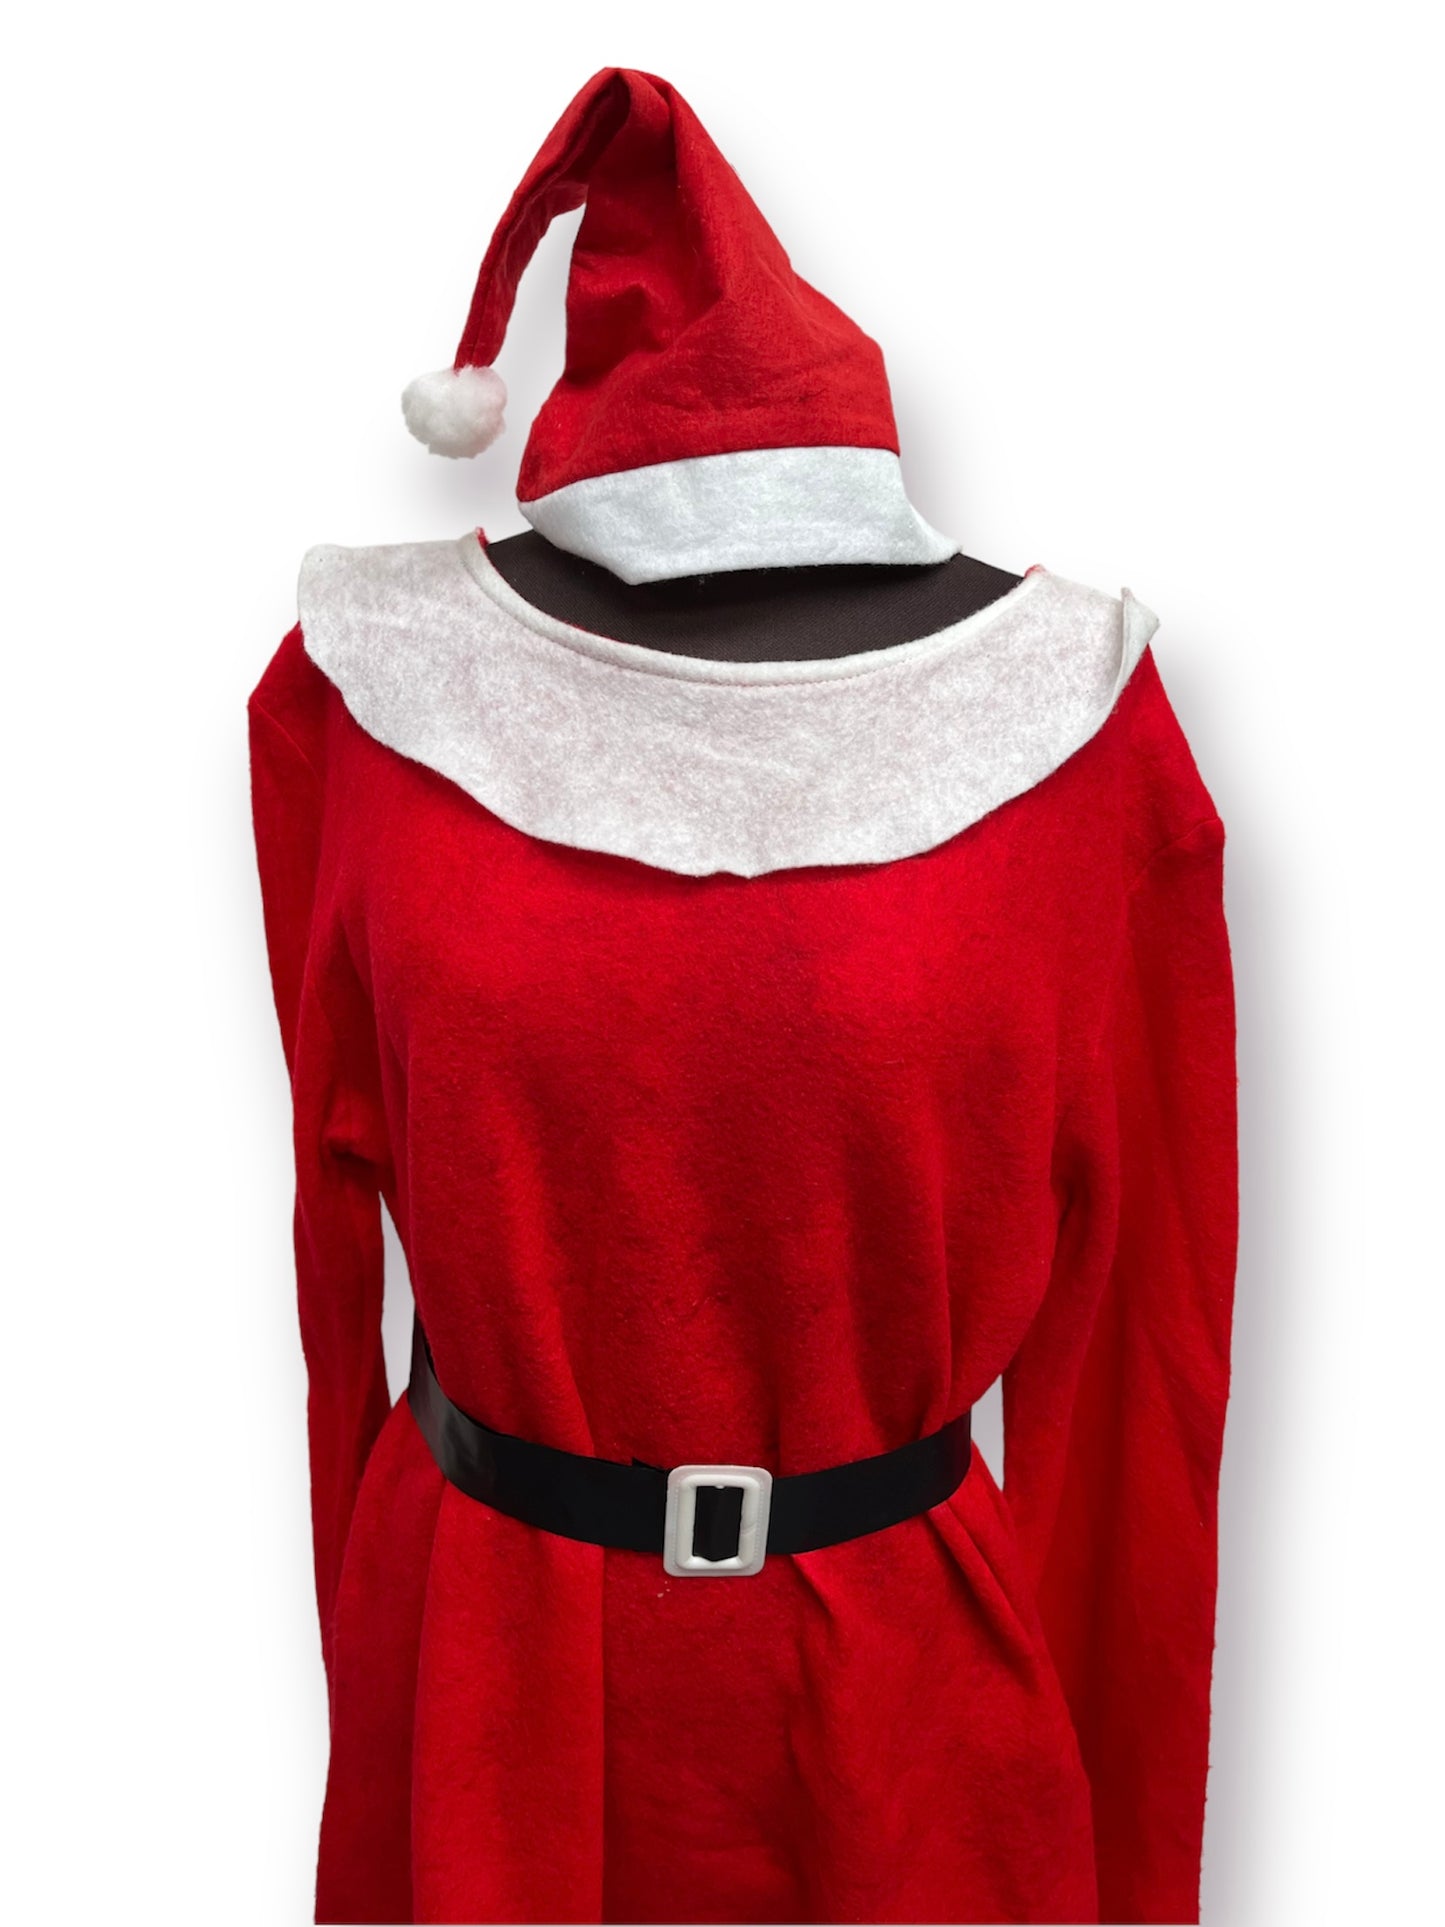 Ms Christmas/Mrs Claus Budget Felt Dress Size Large - Ex Hire Fancy Dress Costume